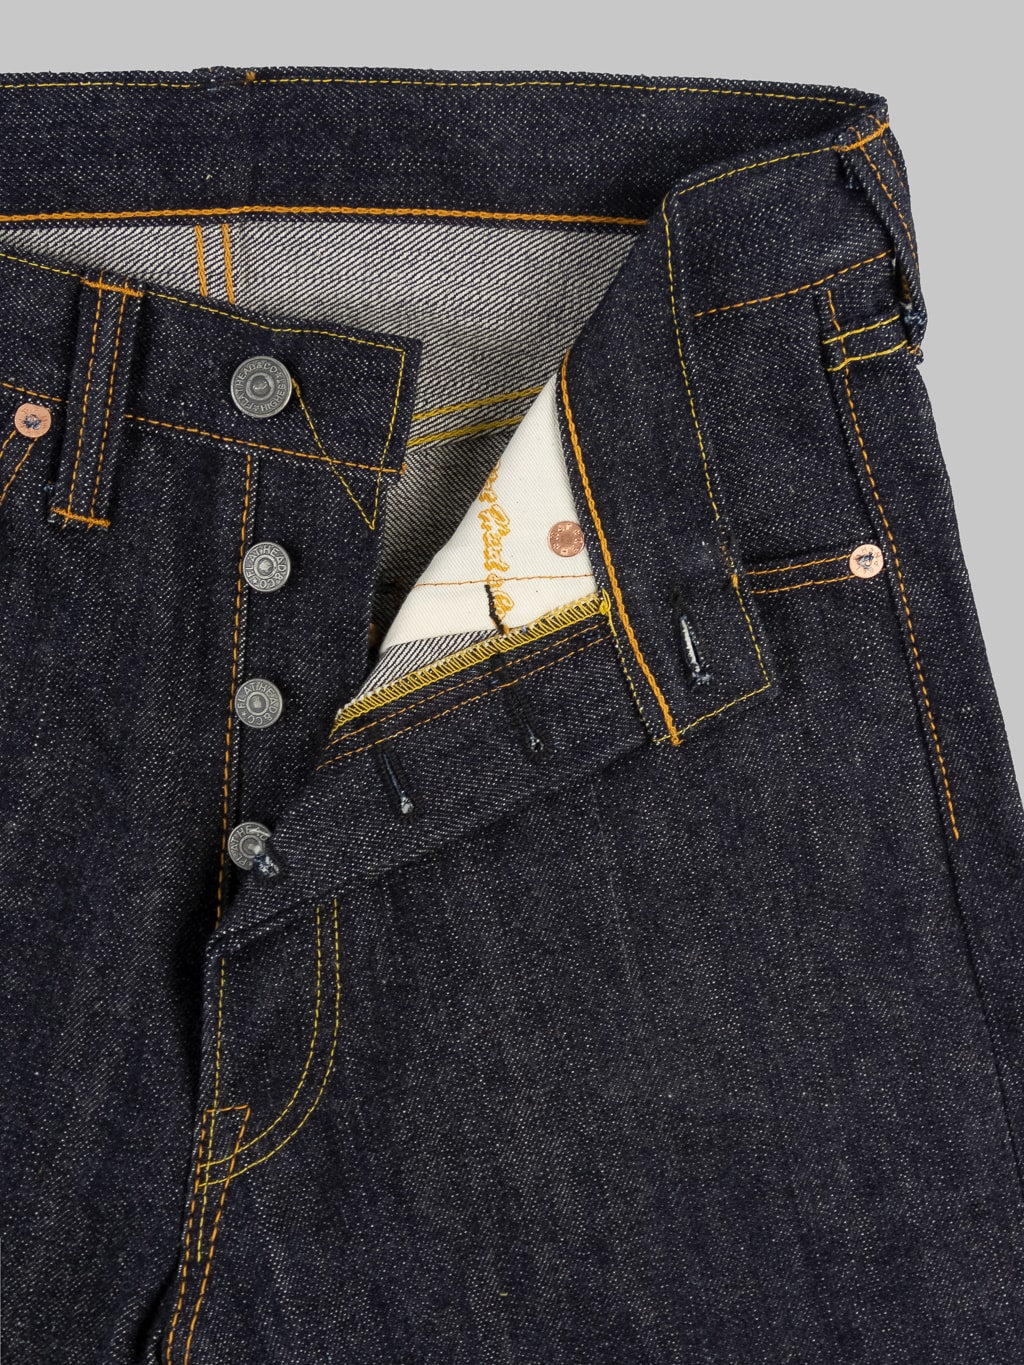 The Flat Head 3004 Regular Straight Jeans  iron buttons